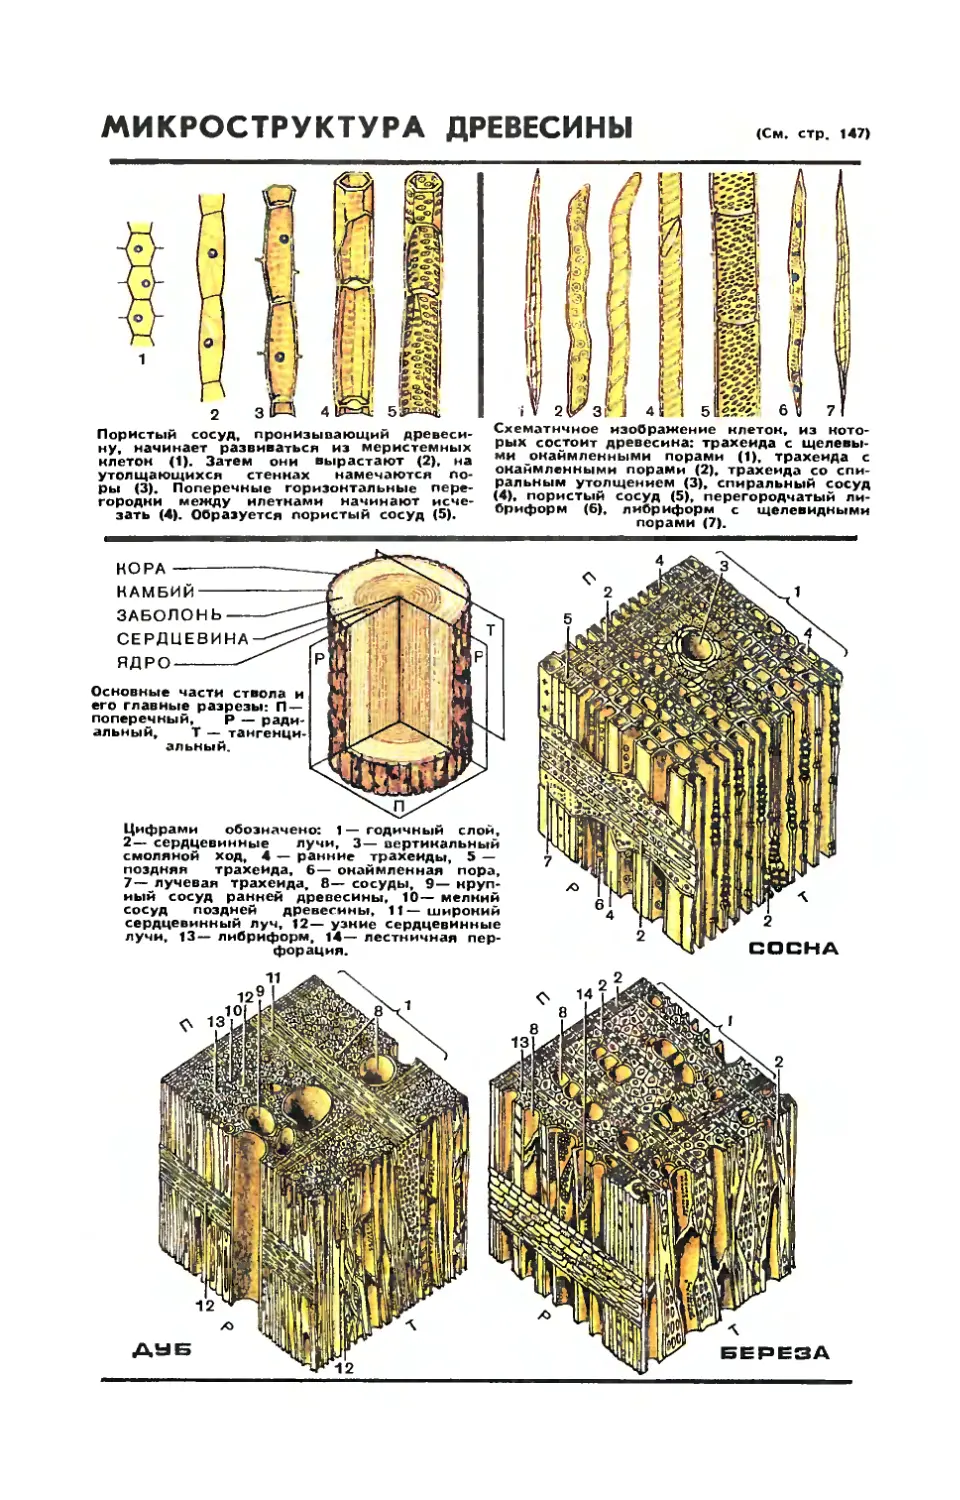 Рис. З. Флоринской — Микроструктура древесины.
Рис. З. Флоринской — Микроструктура древесины.